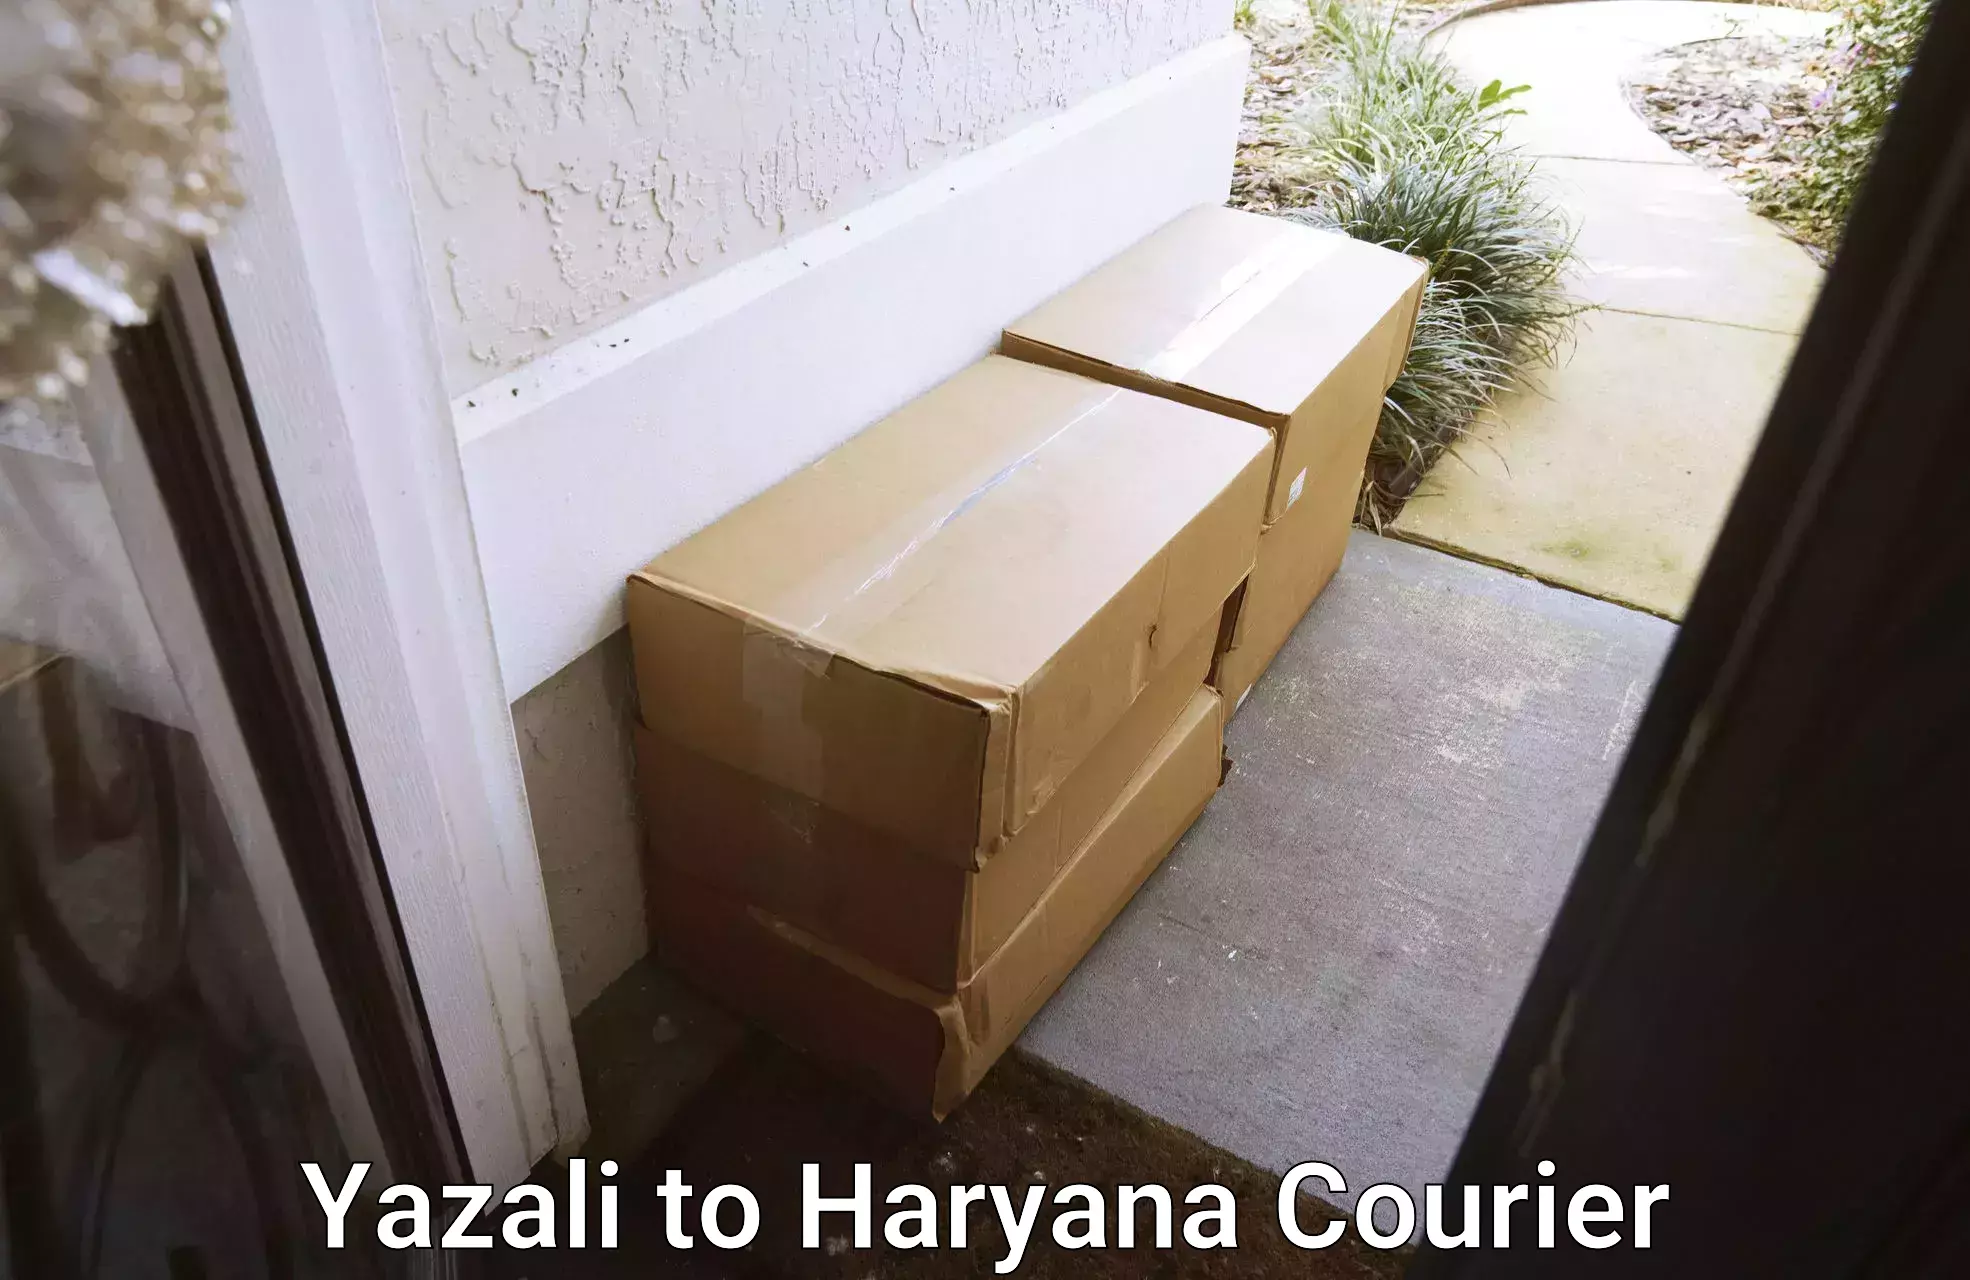 Parcel service for businesses Yazali to Haryana